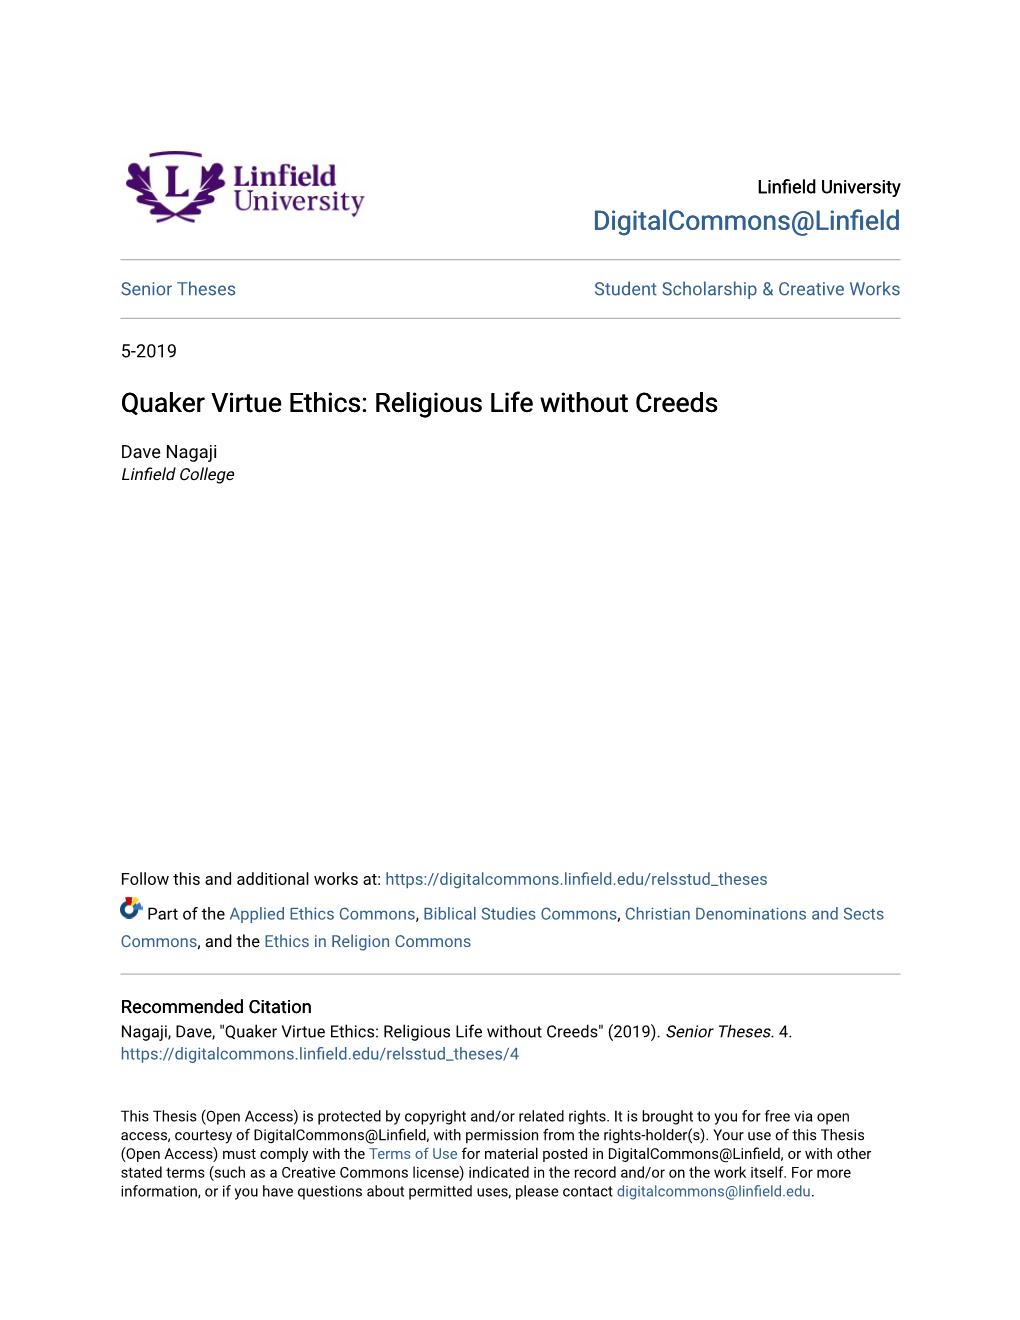 Quaker Virtue Ethics: Religious Life Without Creeds